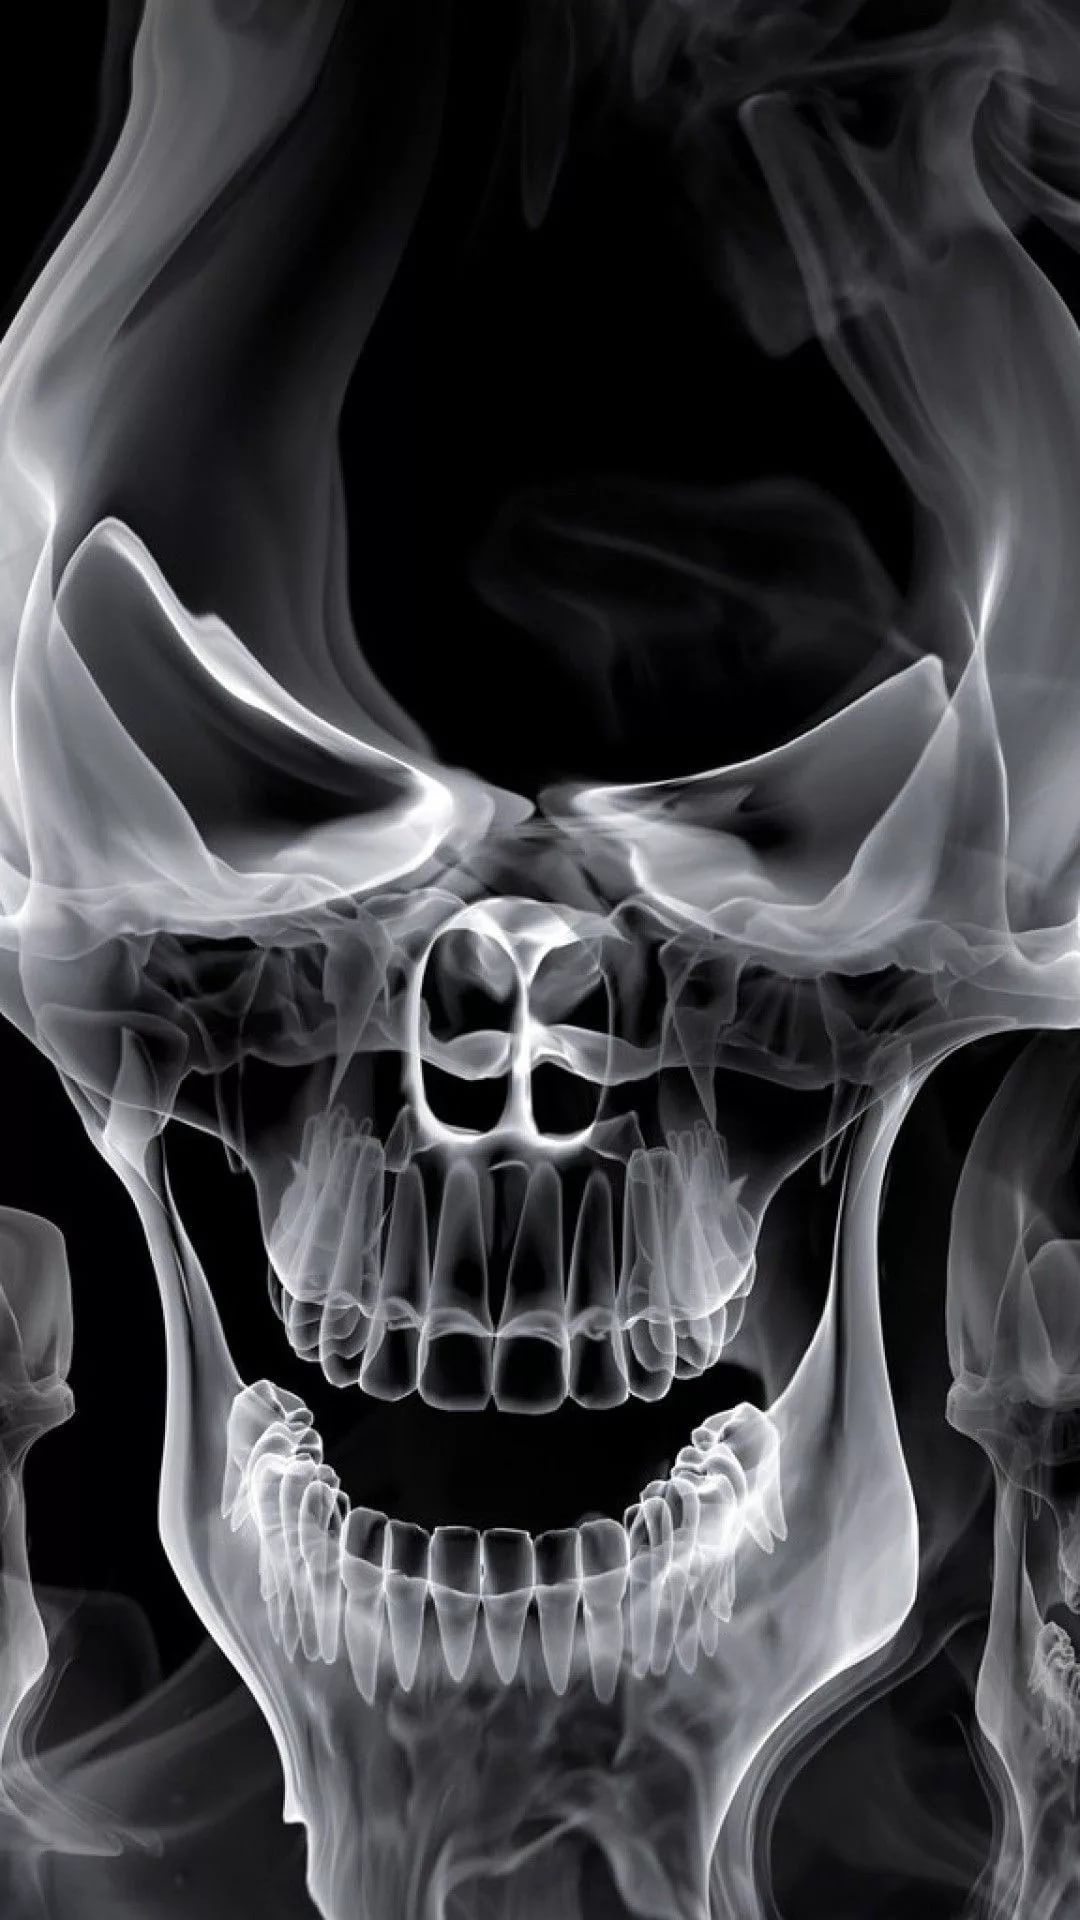 Skeleton iPhone xs wallpaper download